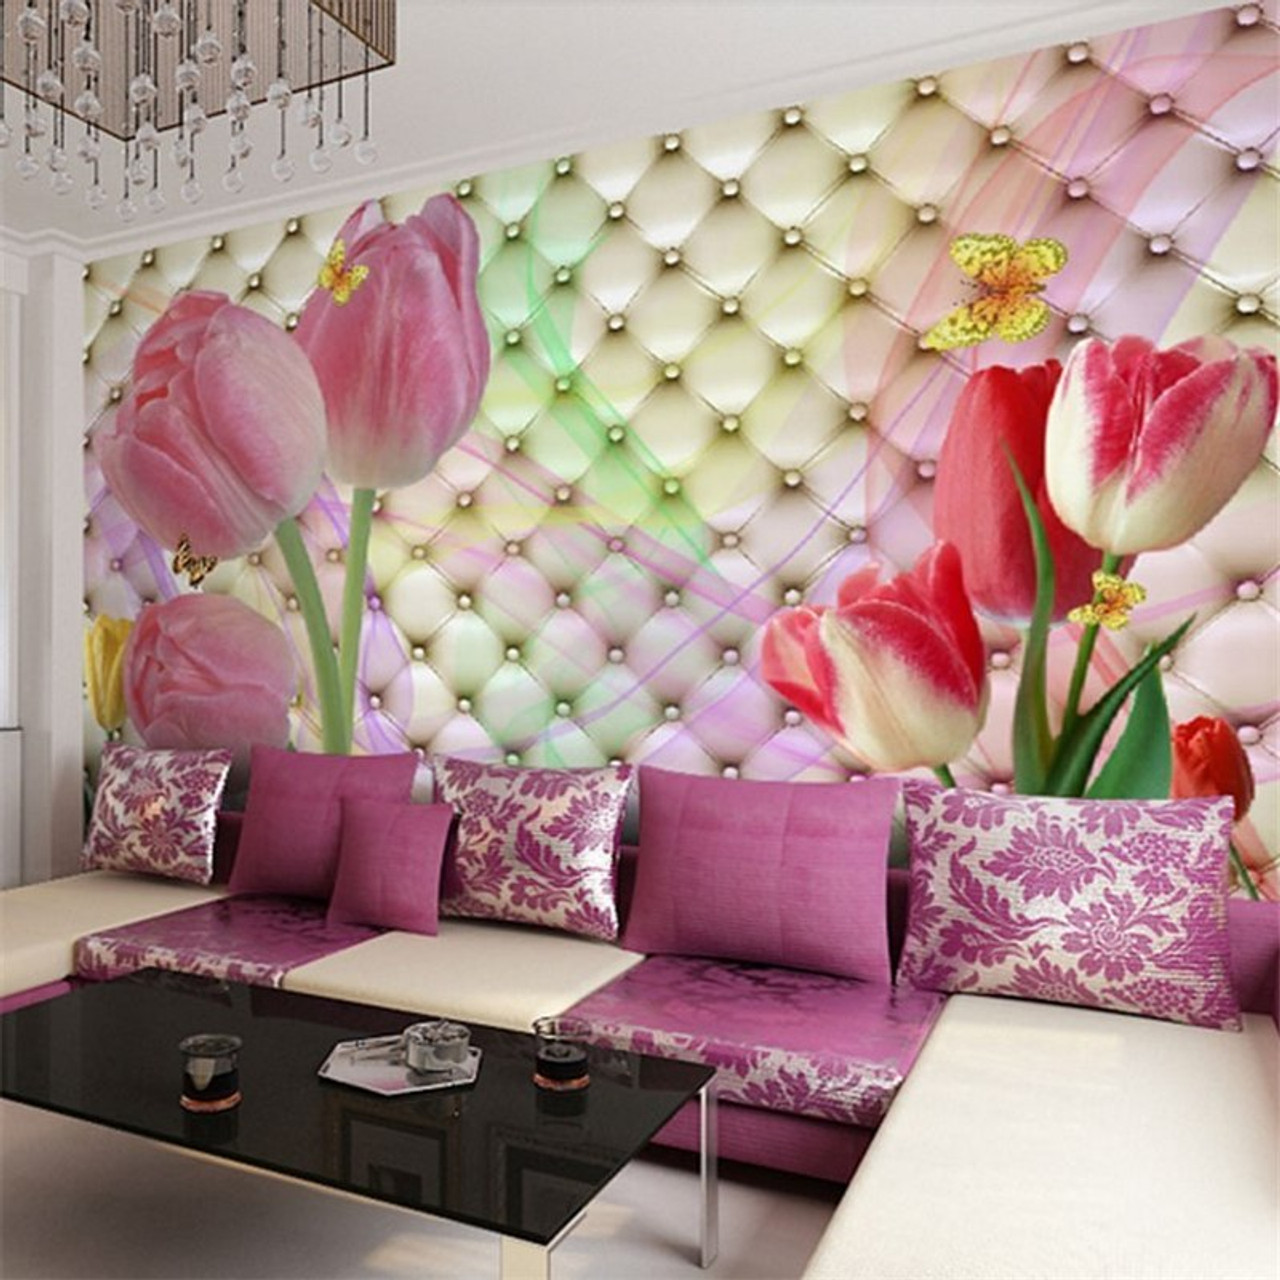 Beibehang Custom Photo Wallpaper Large 3d Stereo Romantic Wedding Room Cozy Living Room Bedroom Tulip Flowers 3d Mural Wallpaper